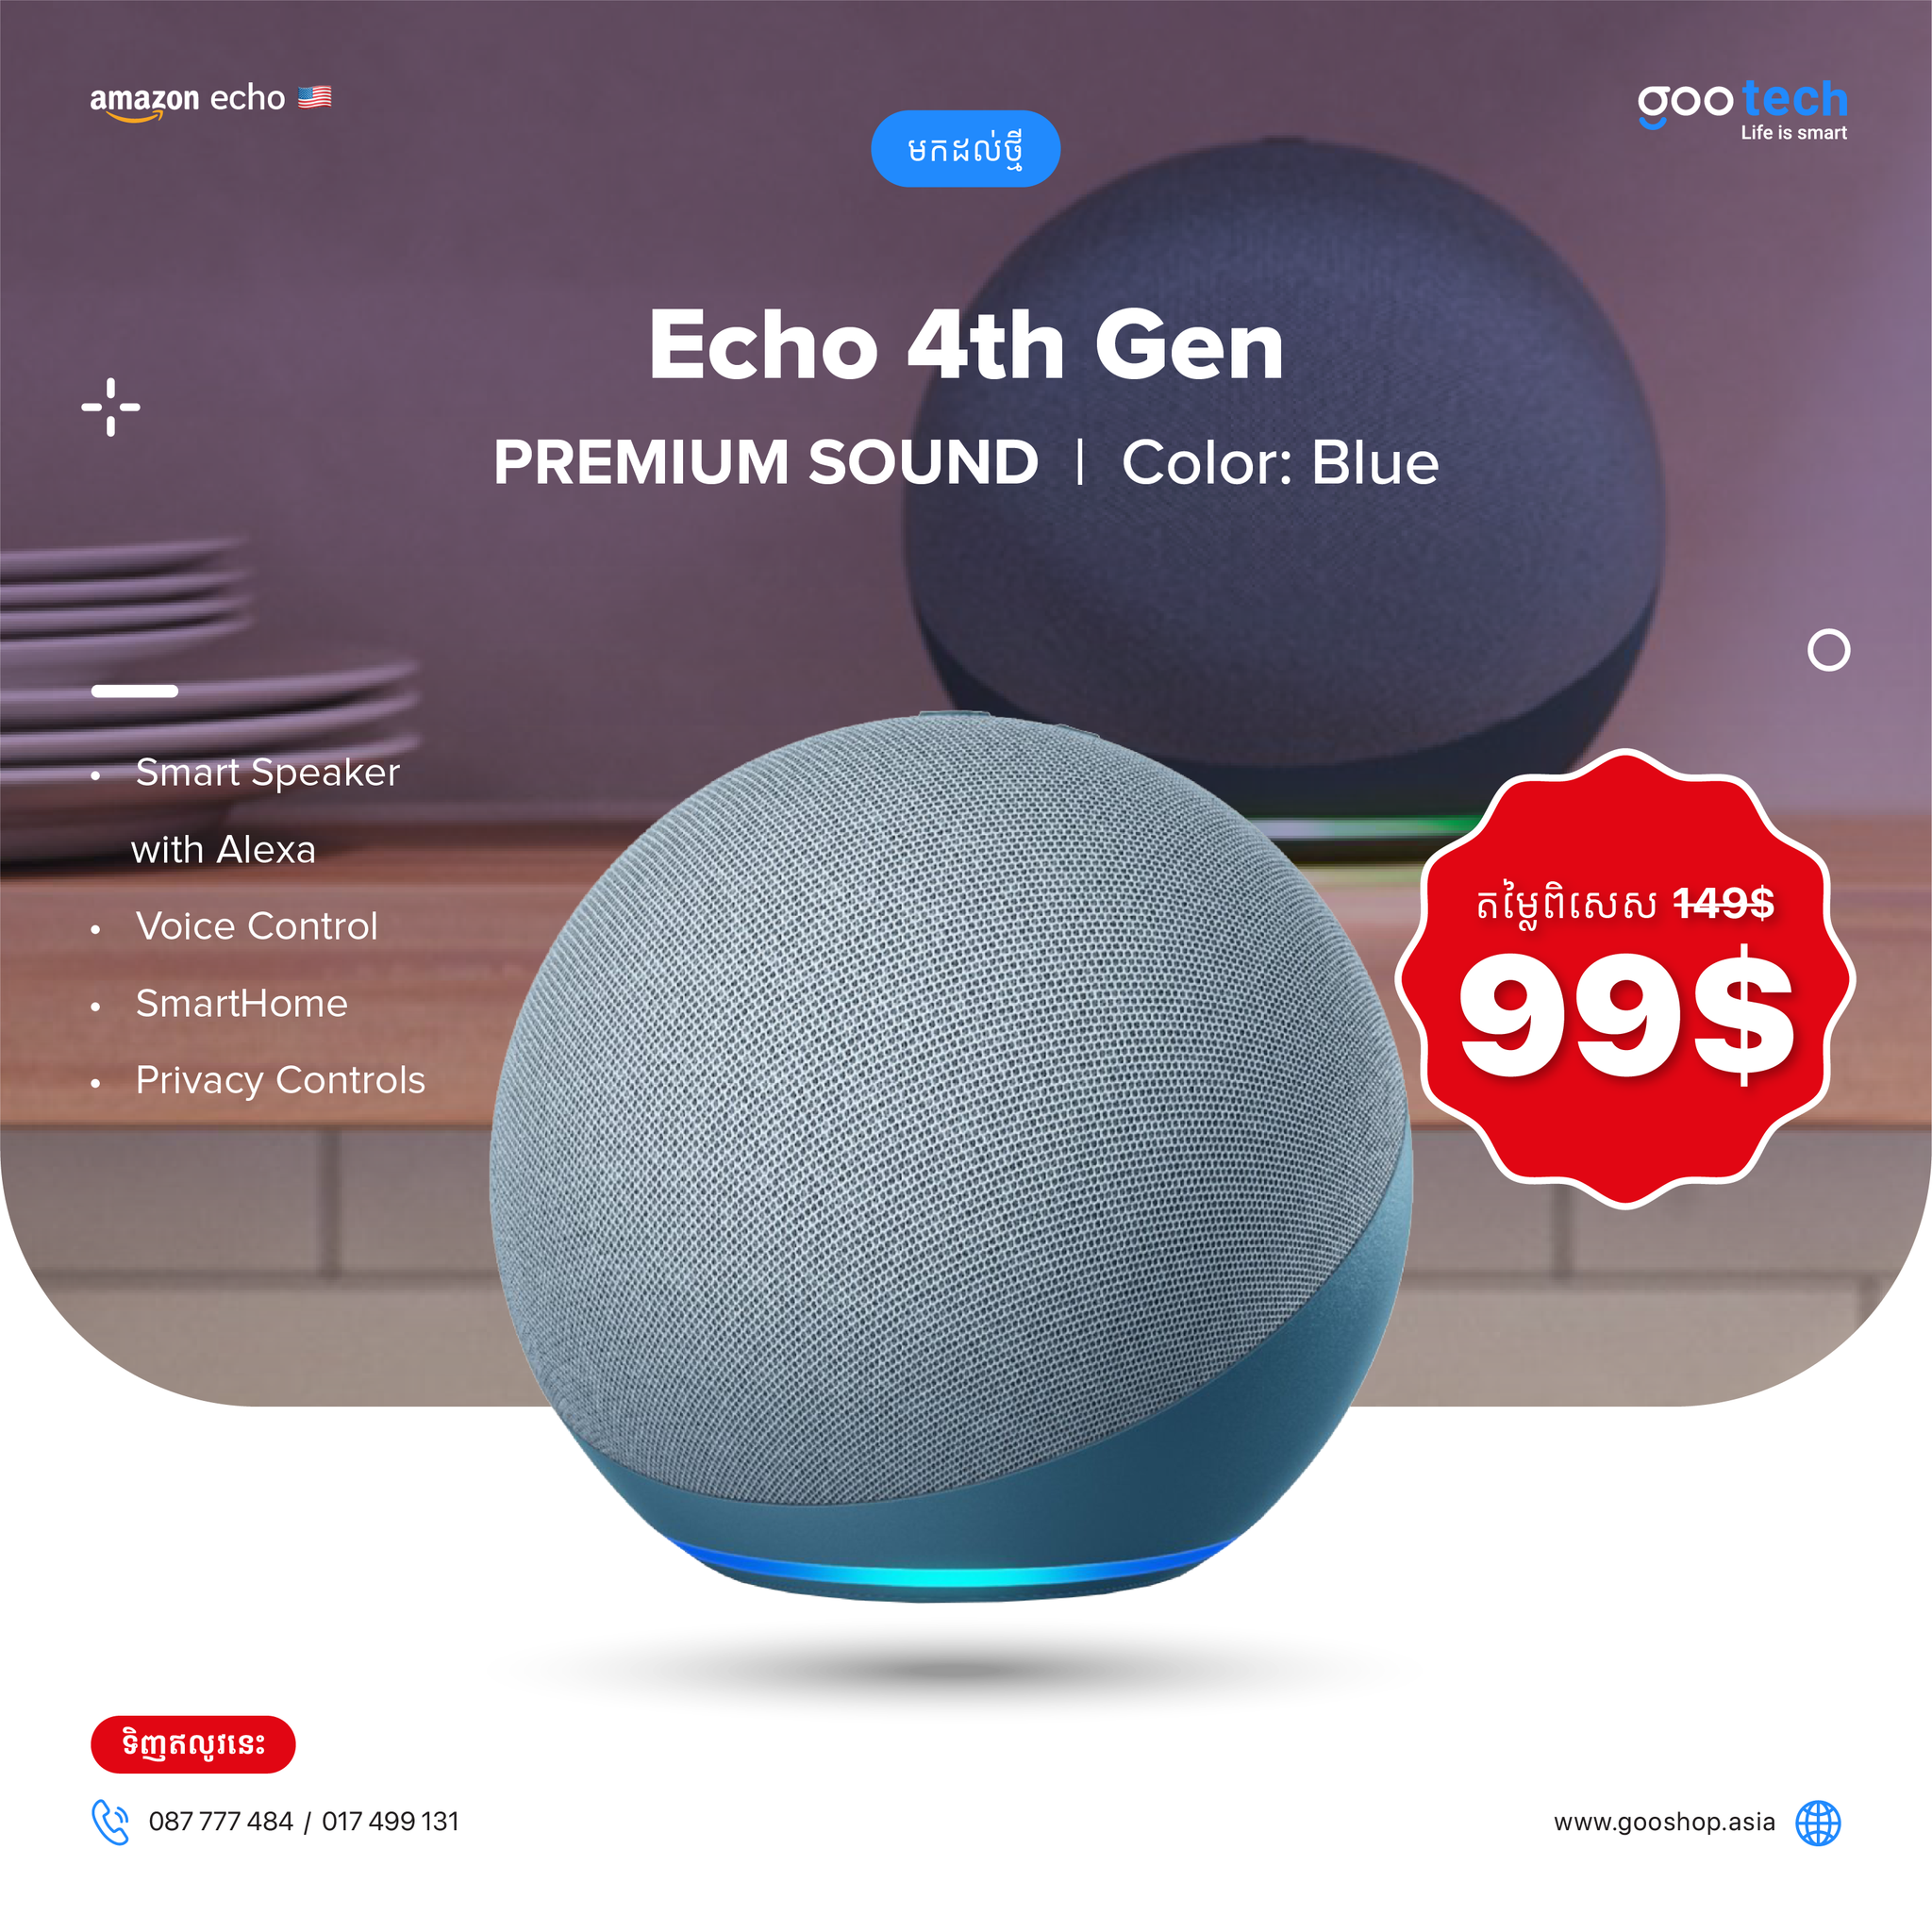 New Echo (4th Generation), Provides Sound, Smart Home Hub and Alexa